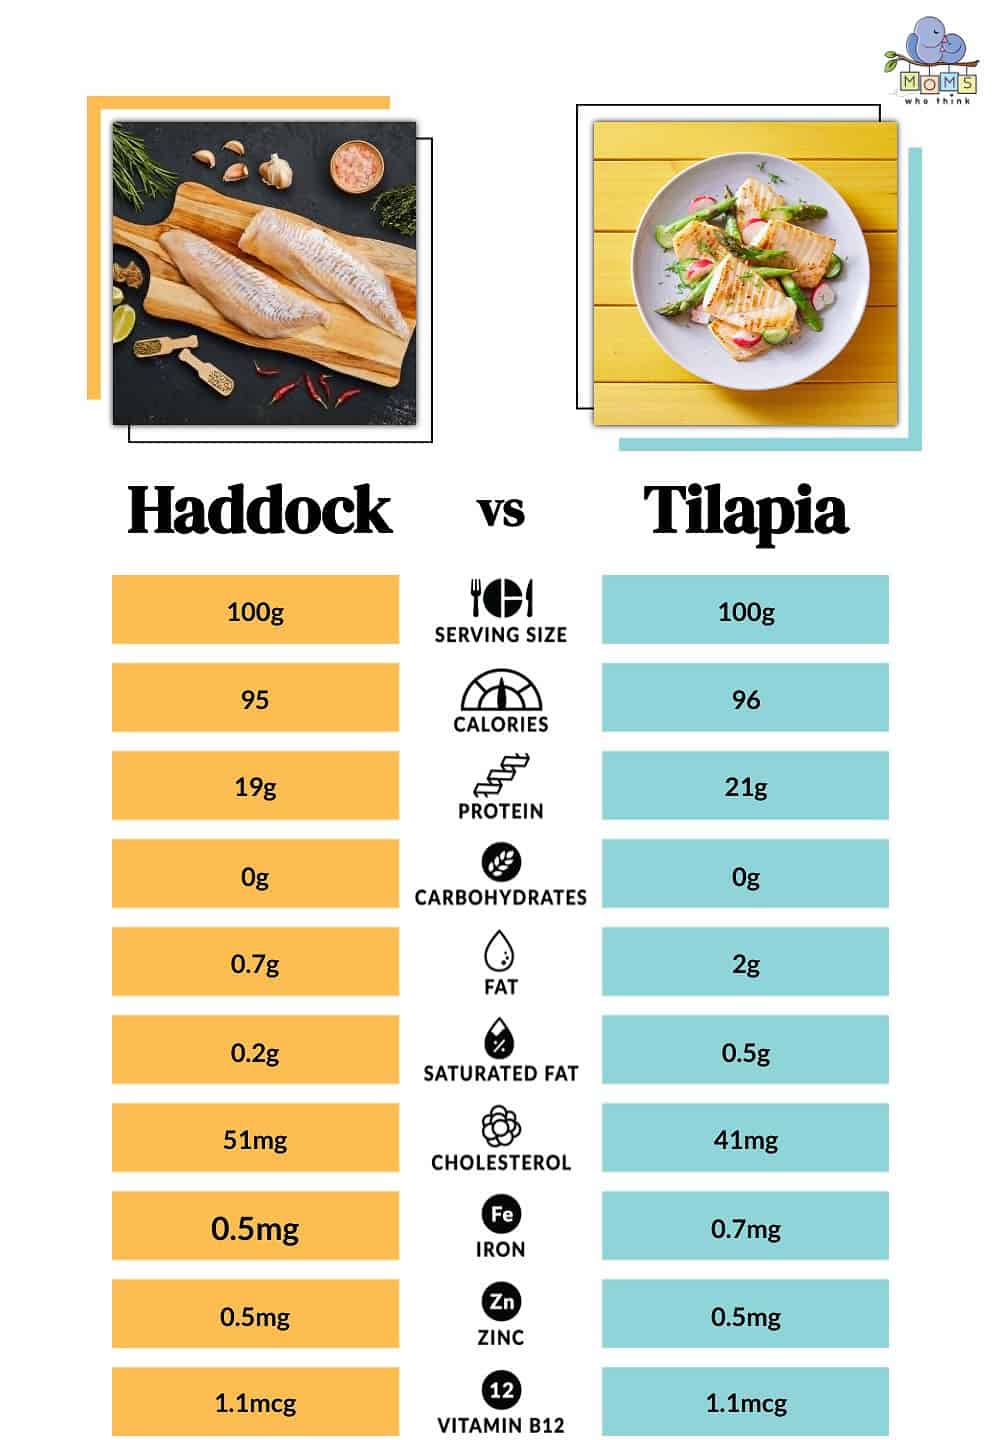 Haddock vs Tilapia Nutritional Facts